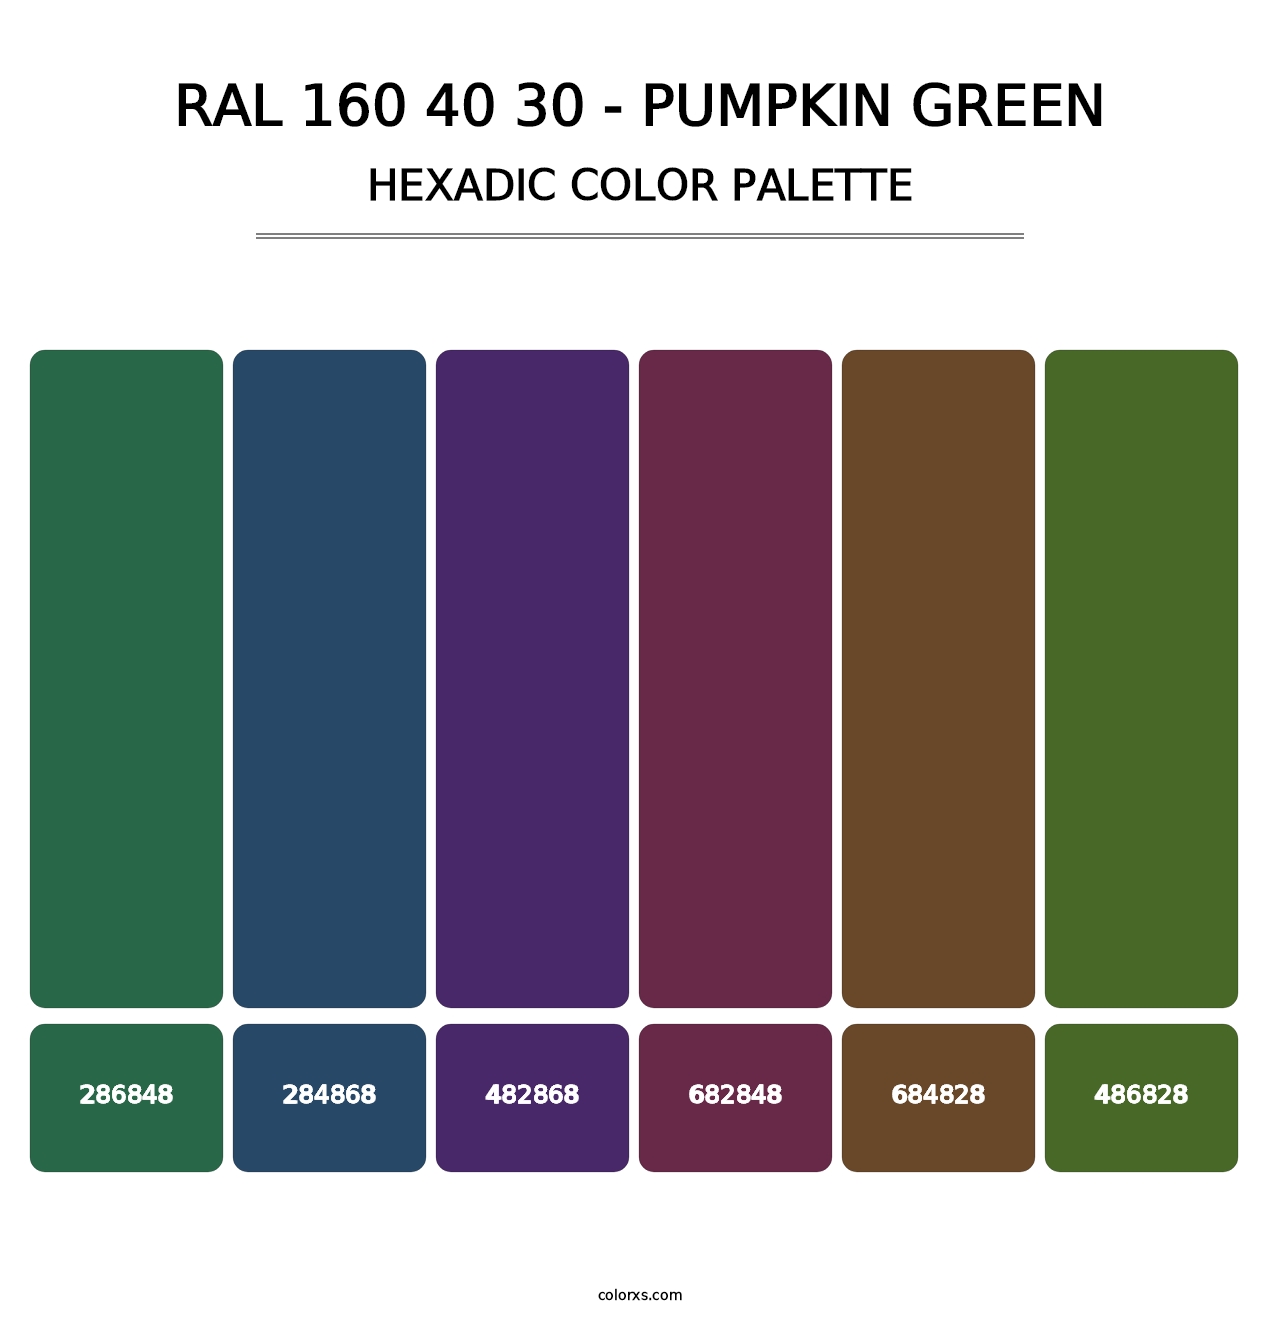 RAL 160 40 30 - Pumpkin Green - Hexadic Color Palette